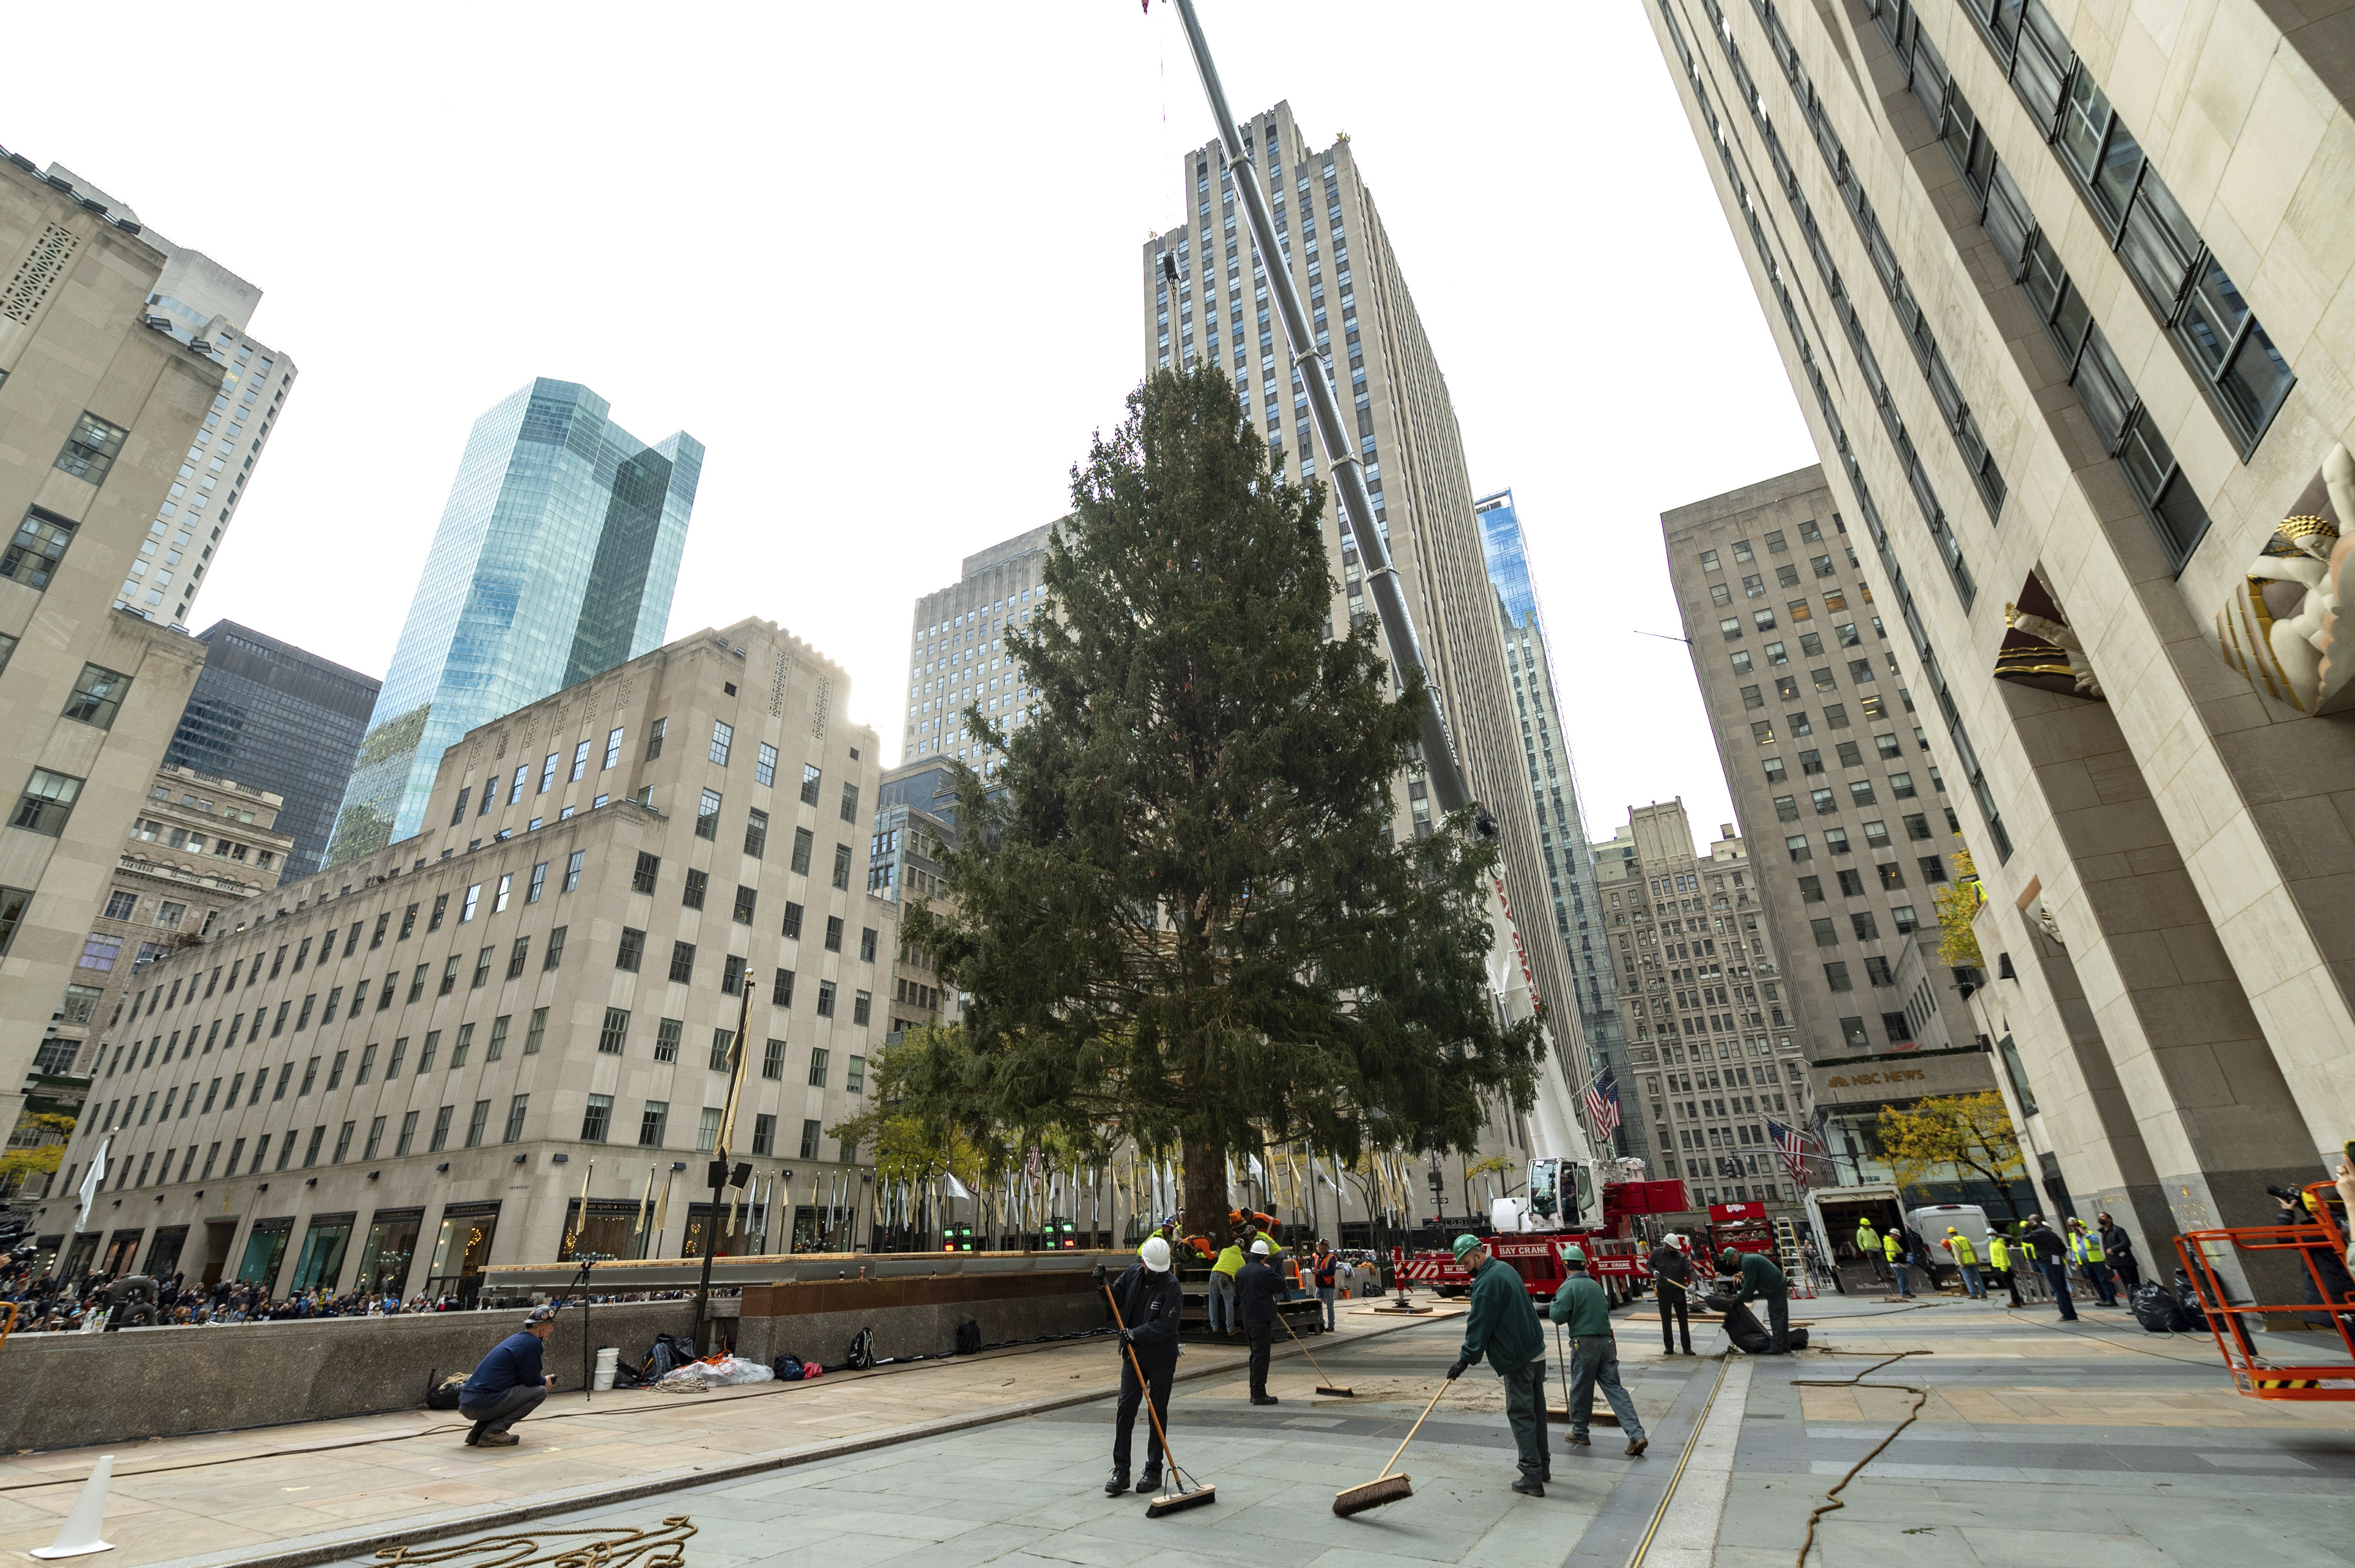 Rockefeller Center Christmas Tree Lighting 2021: Everything to Know